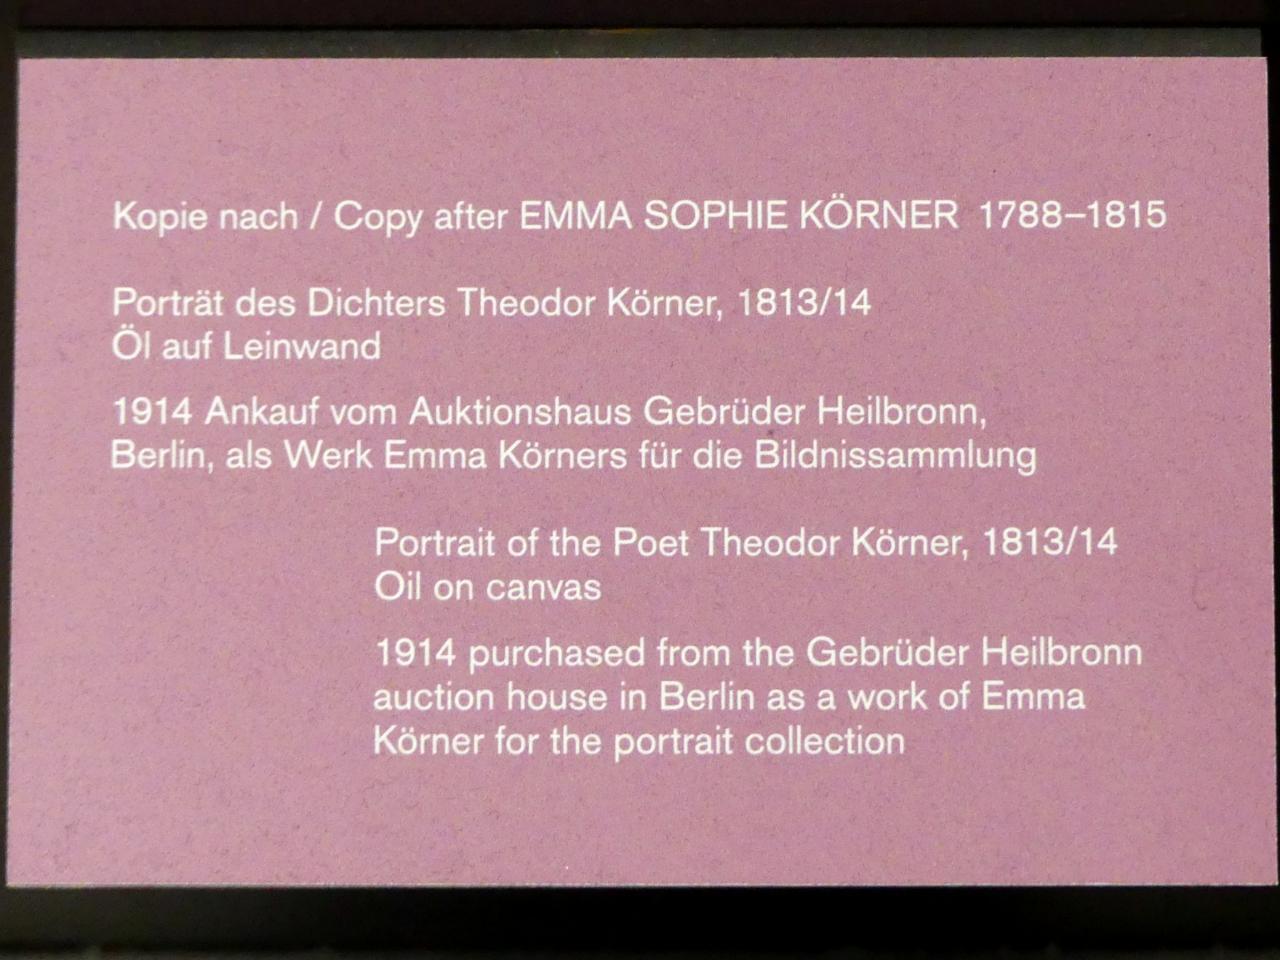 Emma Sophie Körner (Kopie) (1813), Porträt des Dichters Theodor Körner, Berlin, Alte Nationalgalerie, Saal 303, Künstlerinnen der Nationalgalerie vor 1919, 1813–1814, Bild 2/2